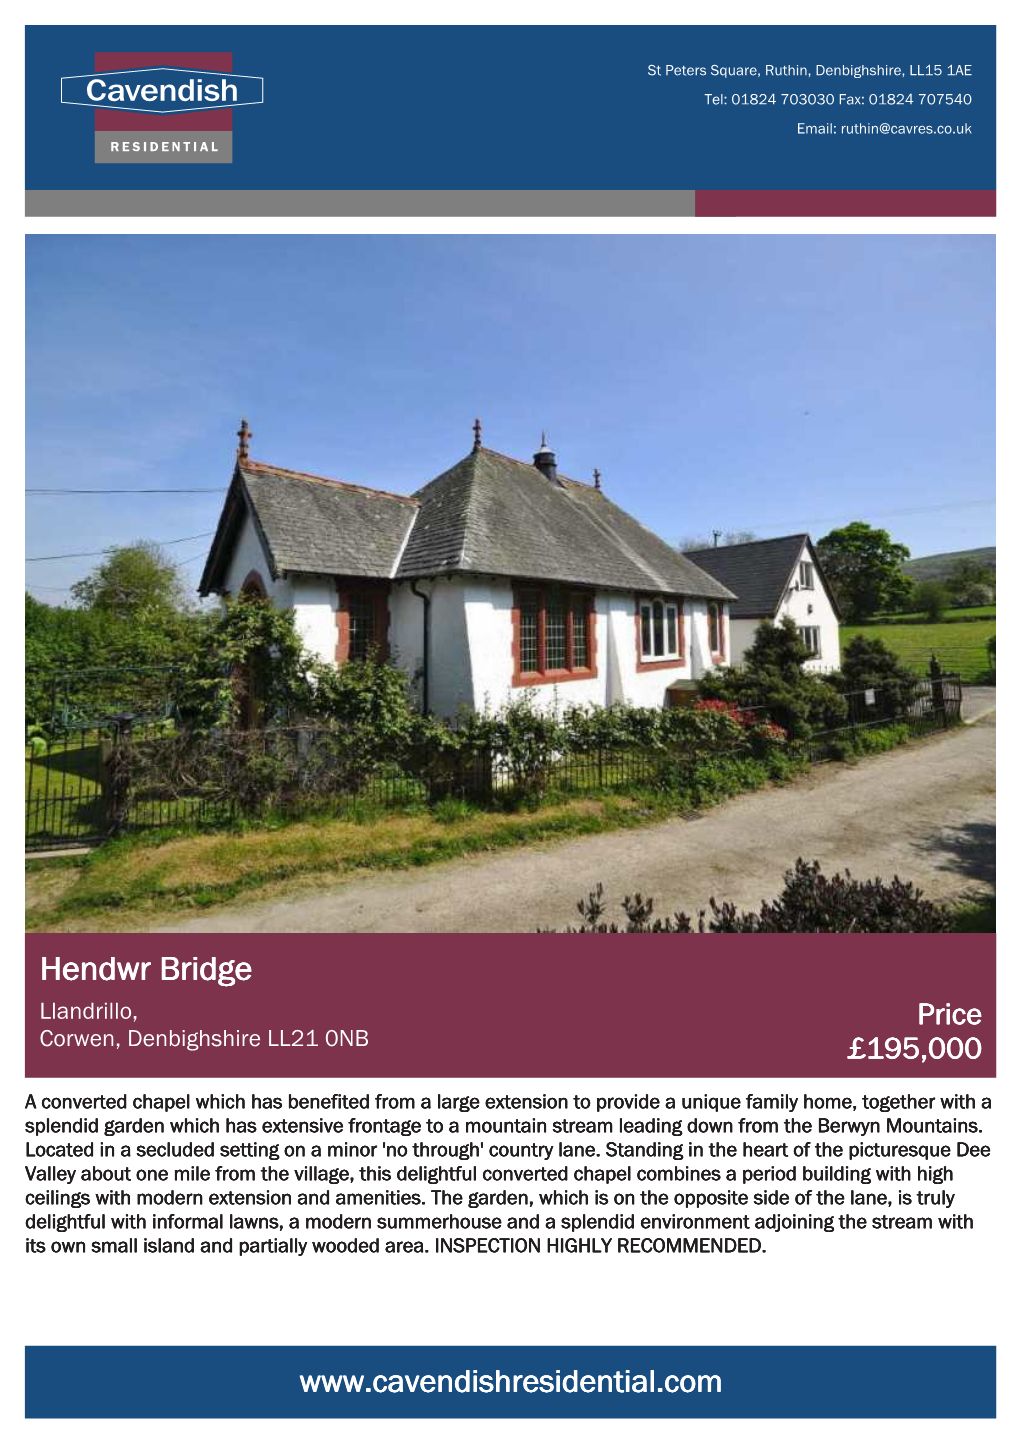 Hendwr Bridge Llandrillo, Price Corwen, Denbighshire LL21 0NB £195,000